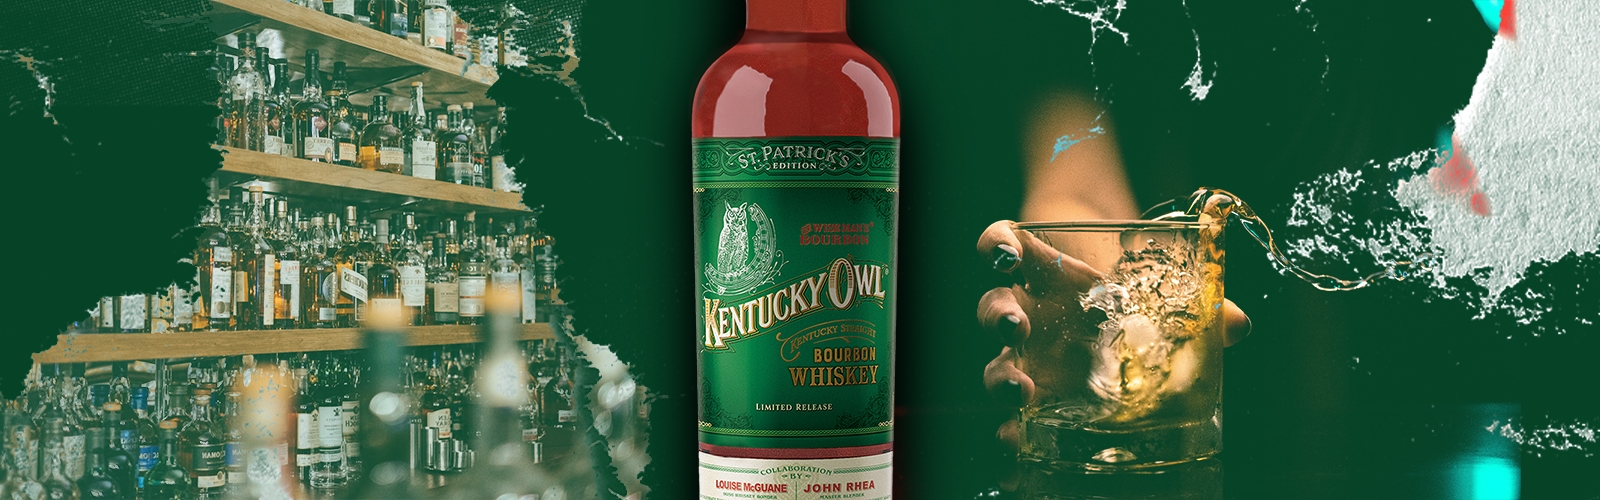 Kentucky Owl St. Patrick's Day